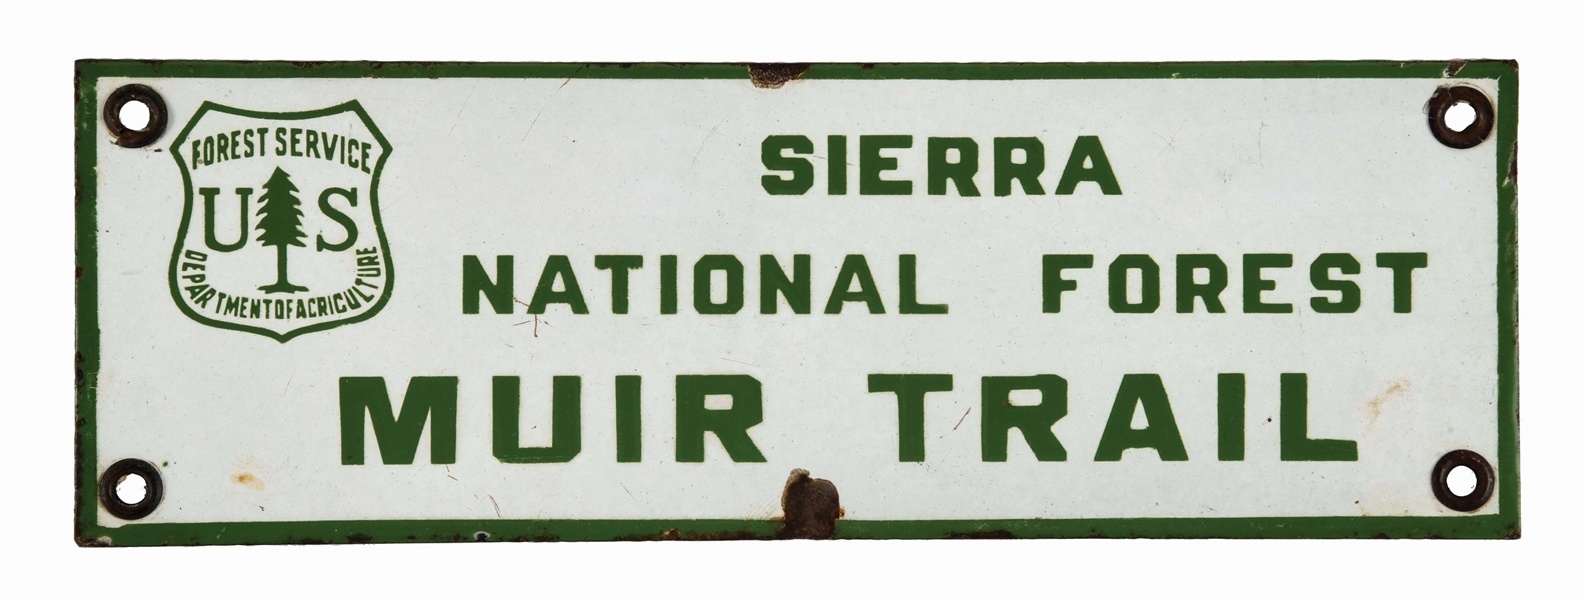 SIERRA NATIONAL FOREST MUIR TRAIL FOREST SERVICE PORCELAIN SIGN. 